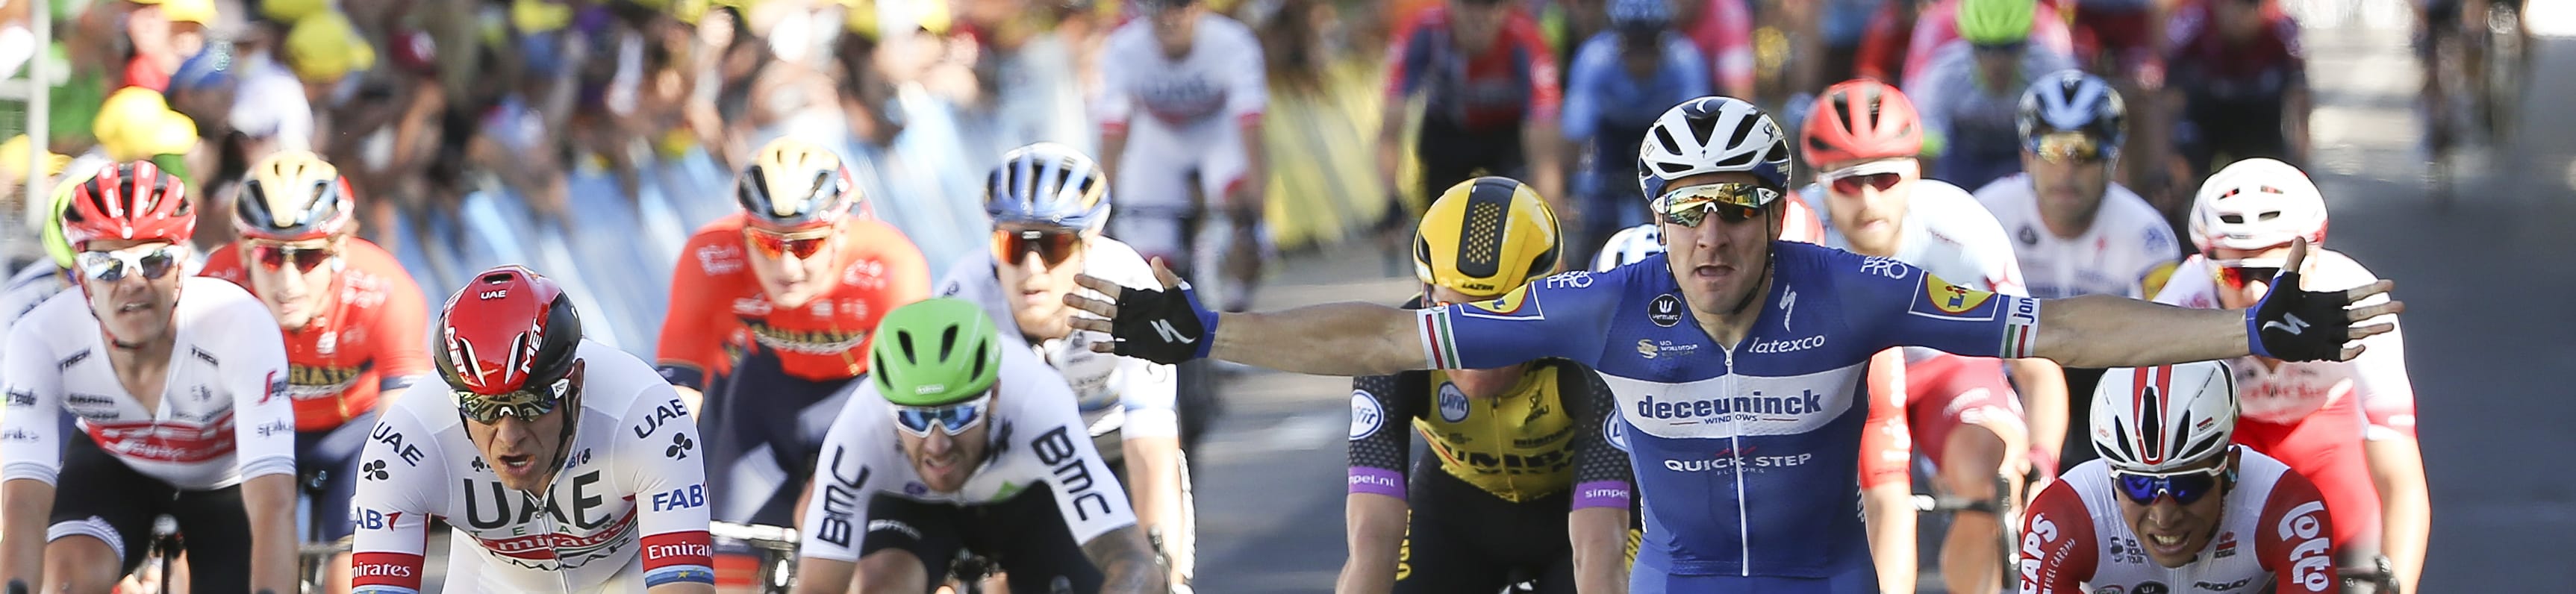 Tour de France 2019, tappa 7: Viviani si candida per il bis